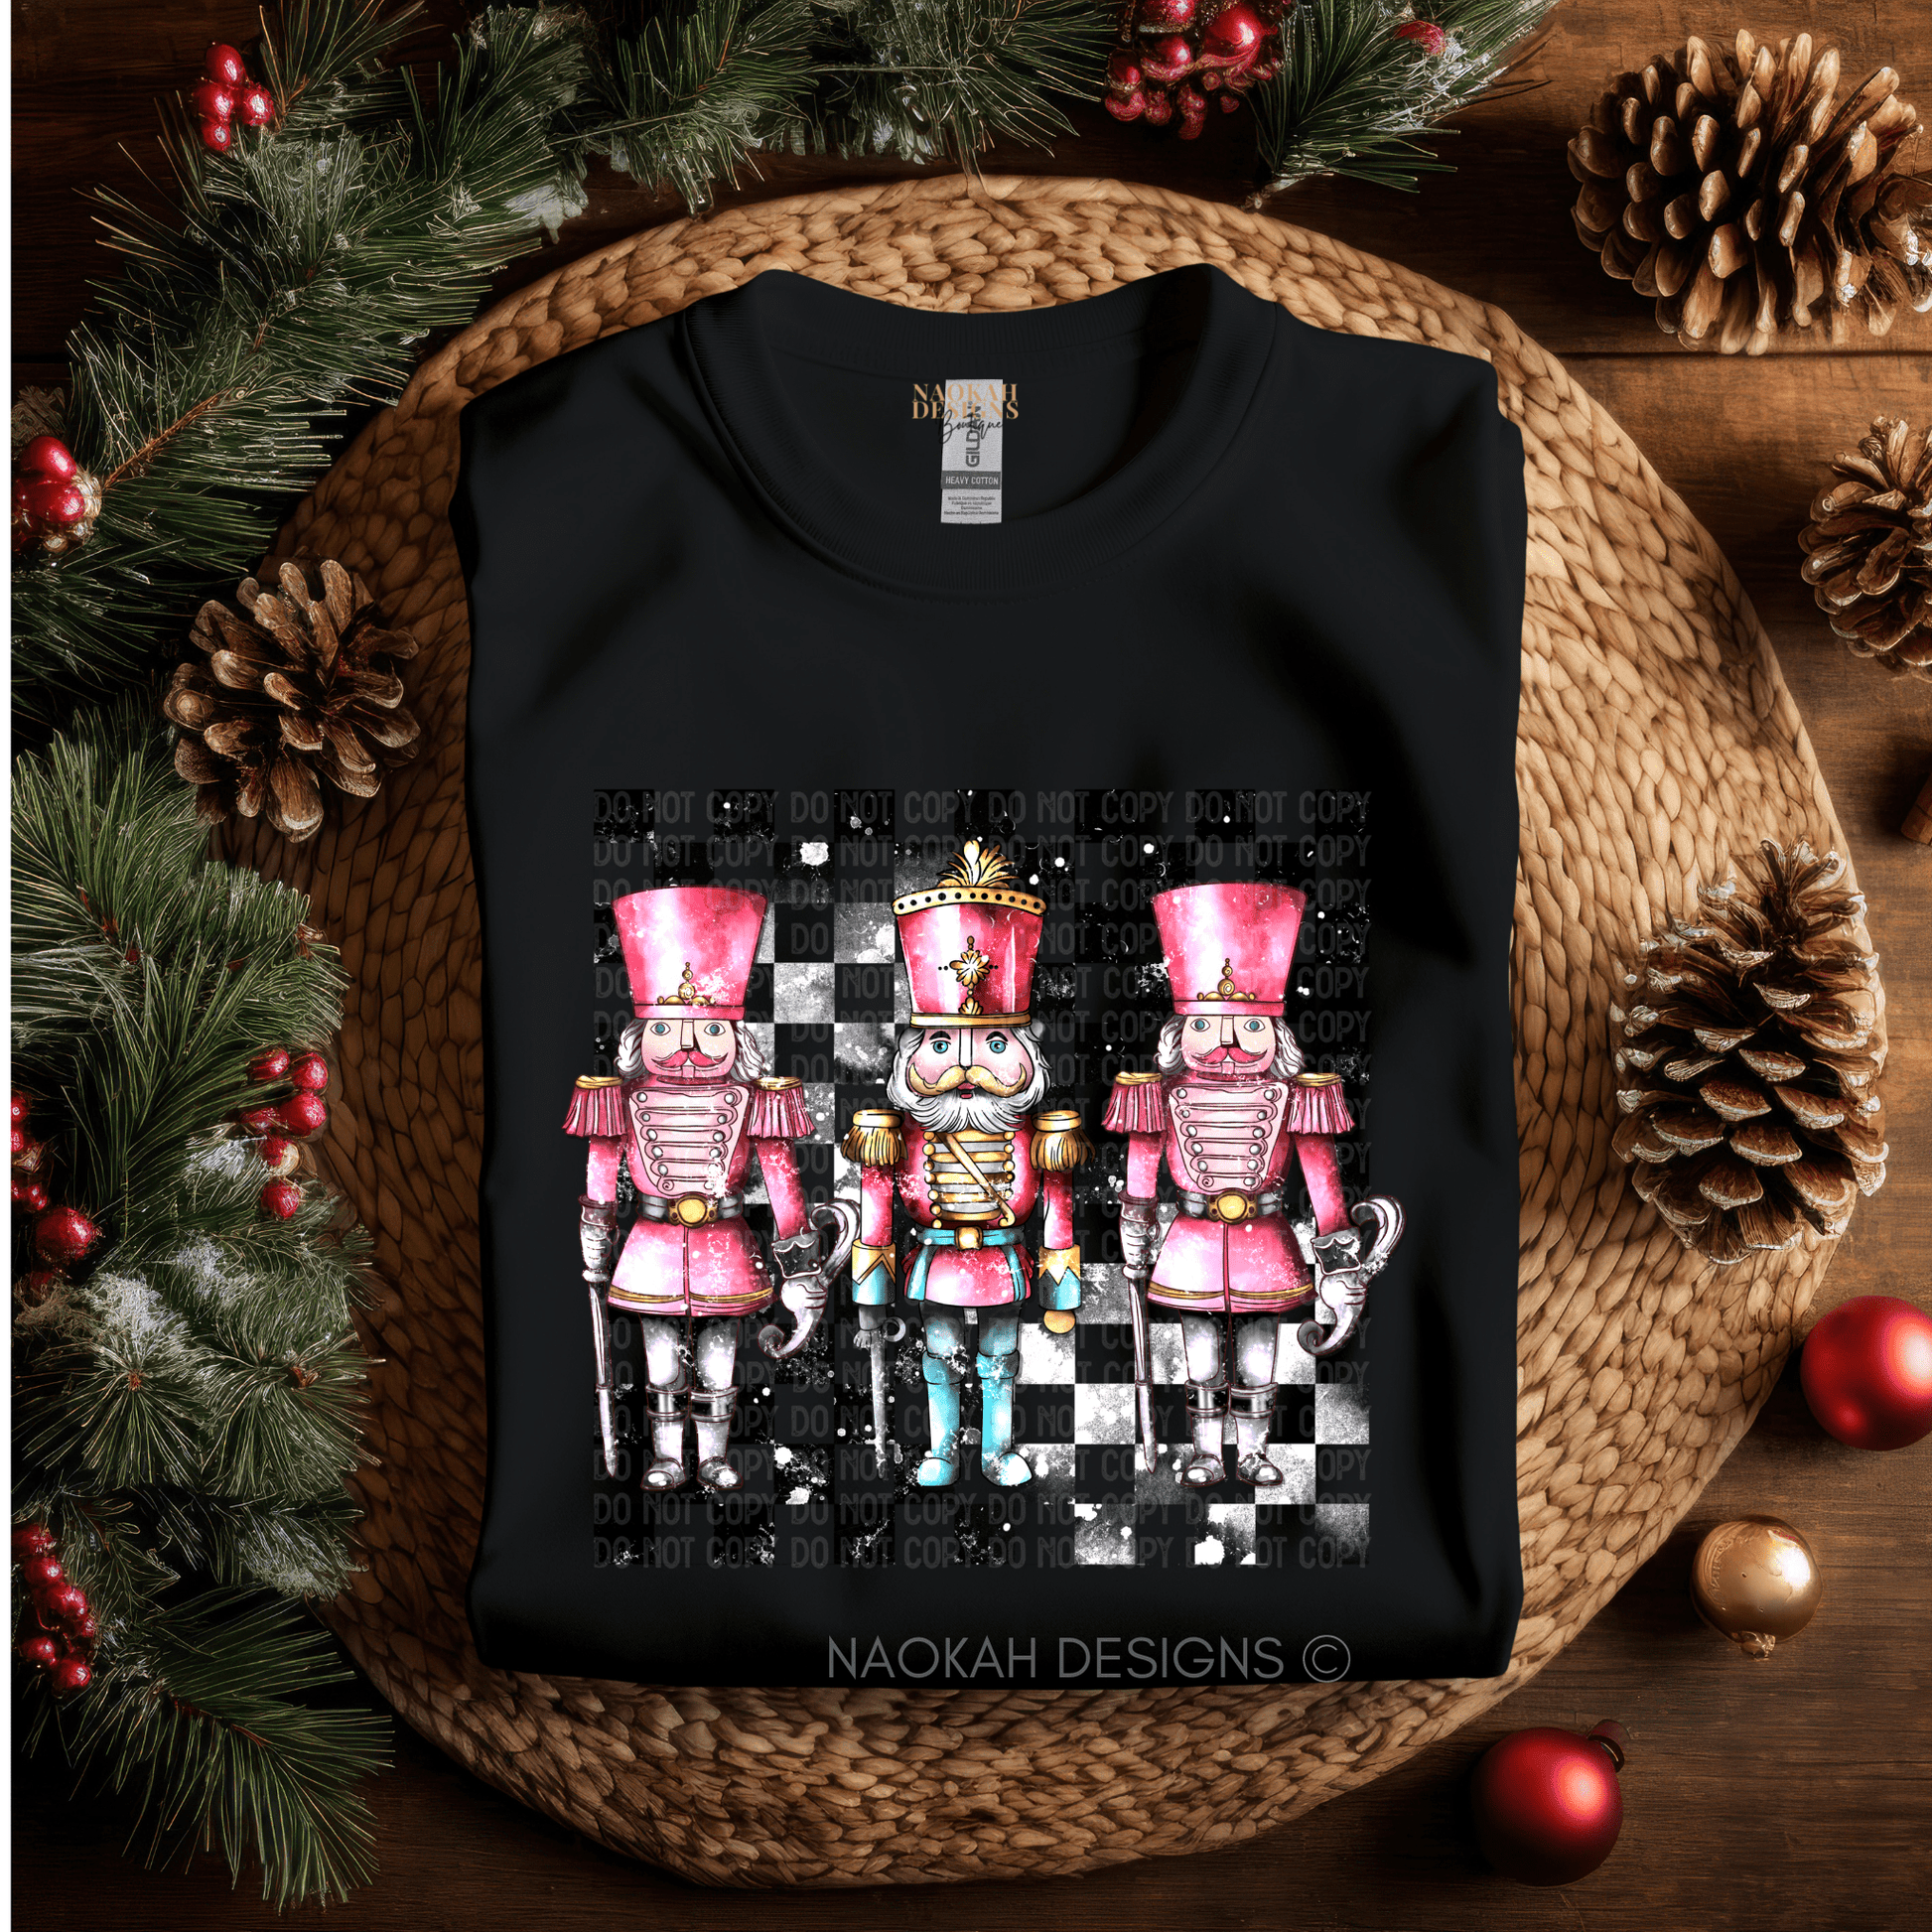 Christmas Nutcracker Sweater, Pink Retro Nutcracker Shirt, Nutcracker Ballet Shirt, Sugar Plum Fairy, Groovy Checkered Christmas Holiday